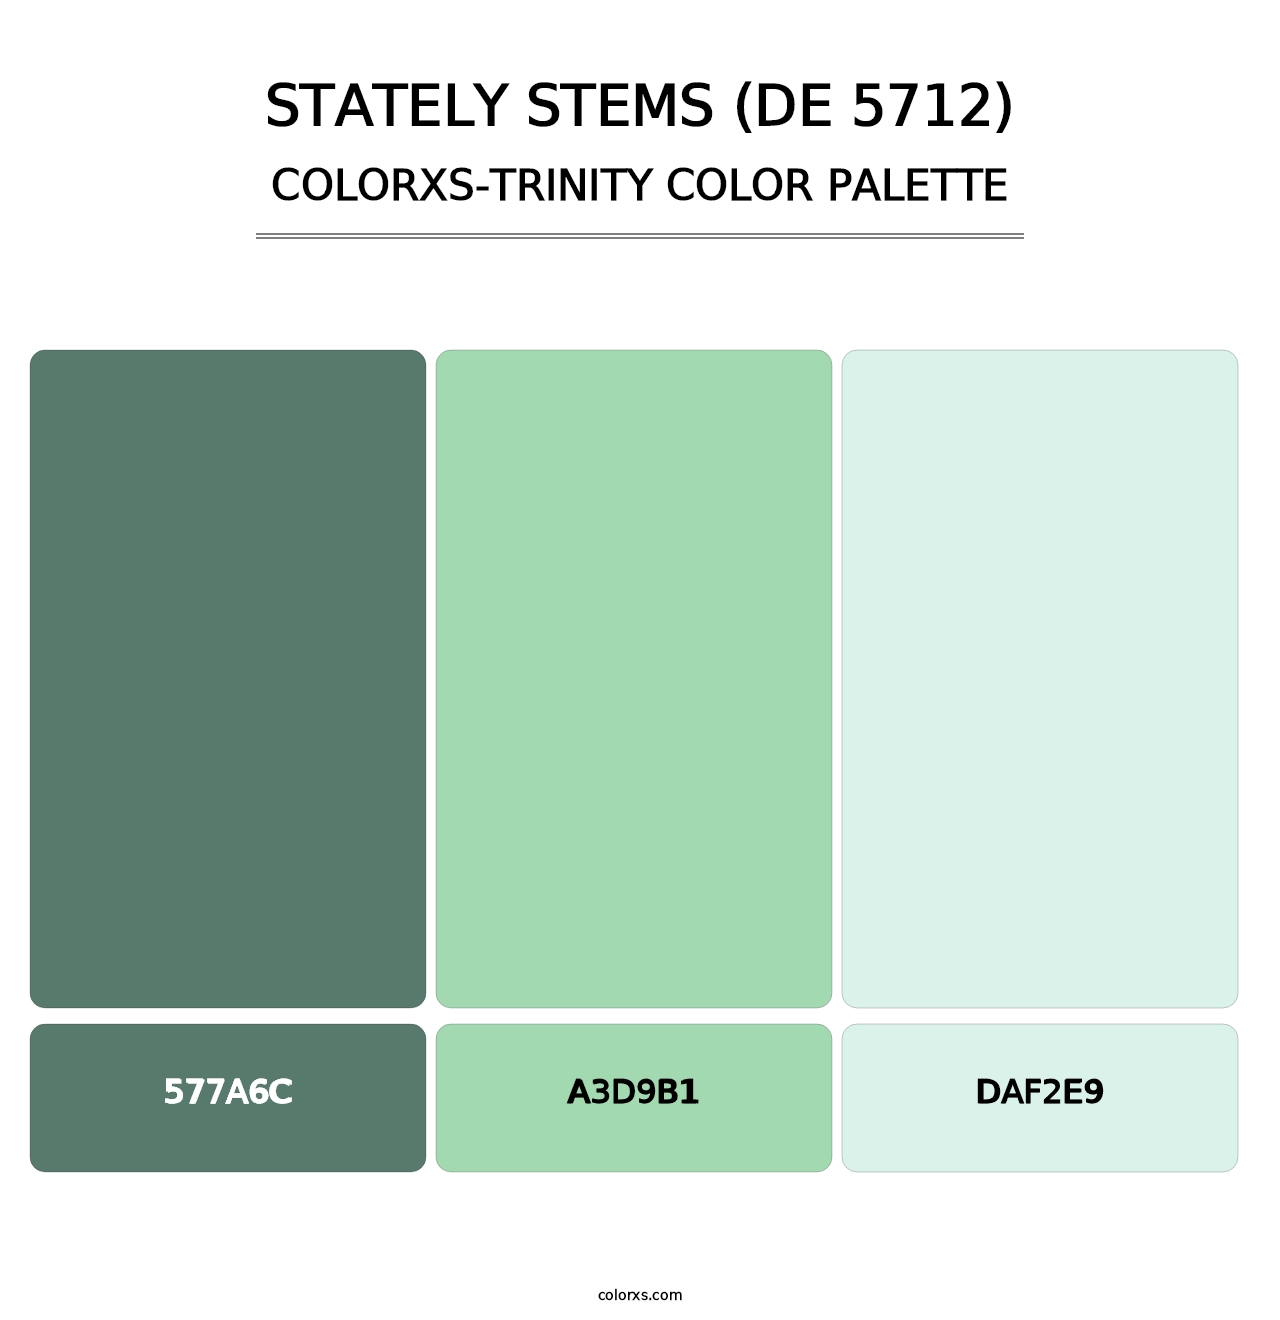 Stately Stems (DE 5712) - Colorxs Trinity Palette